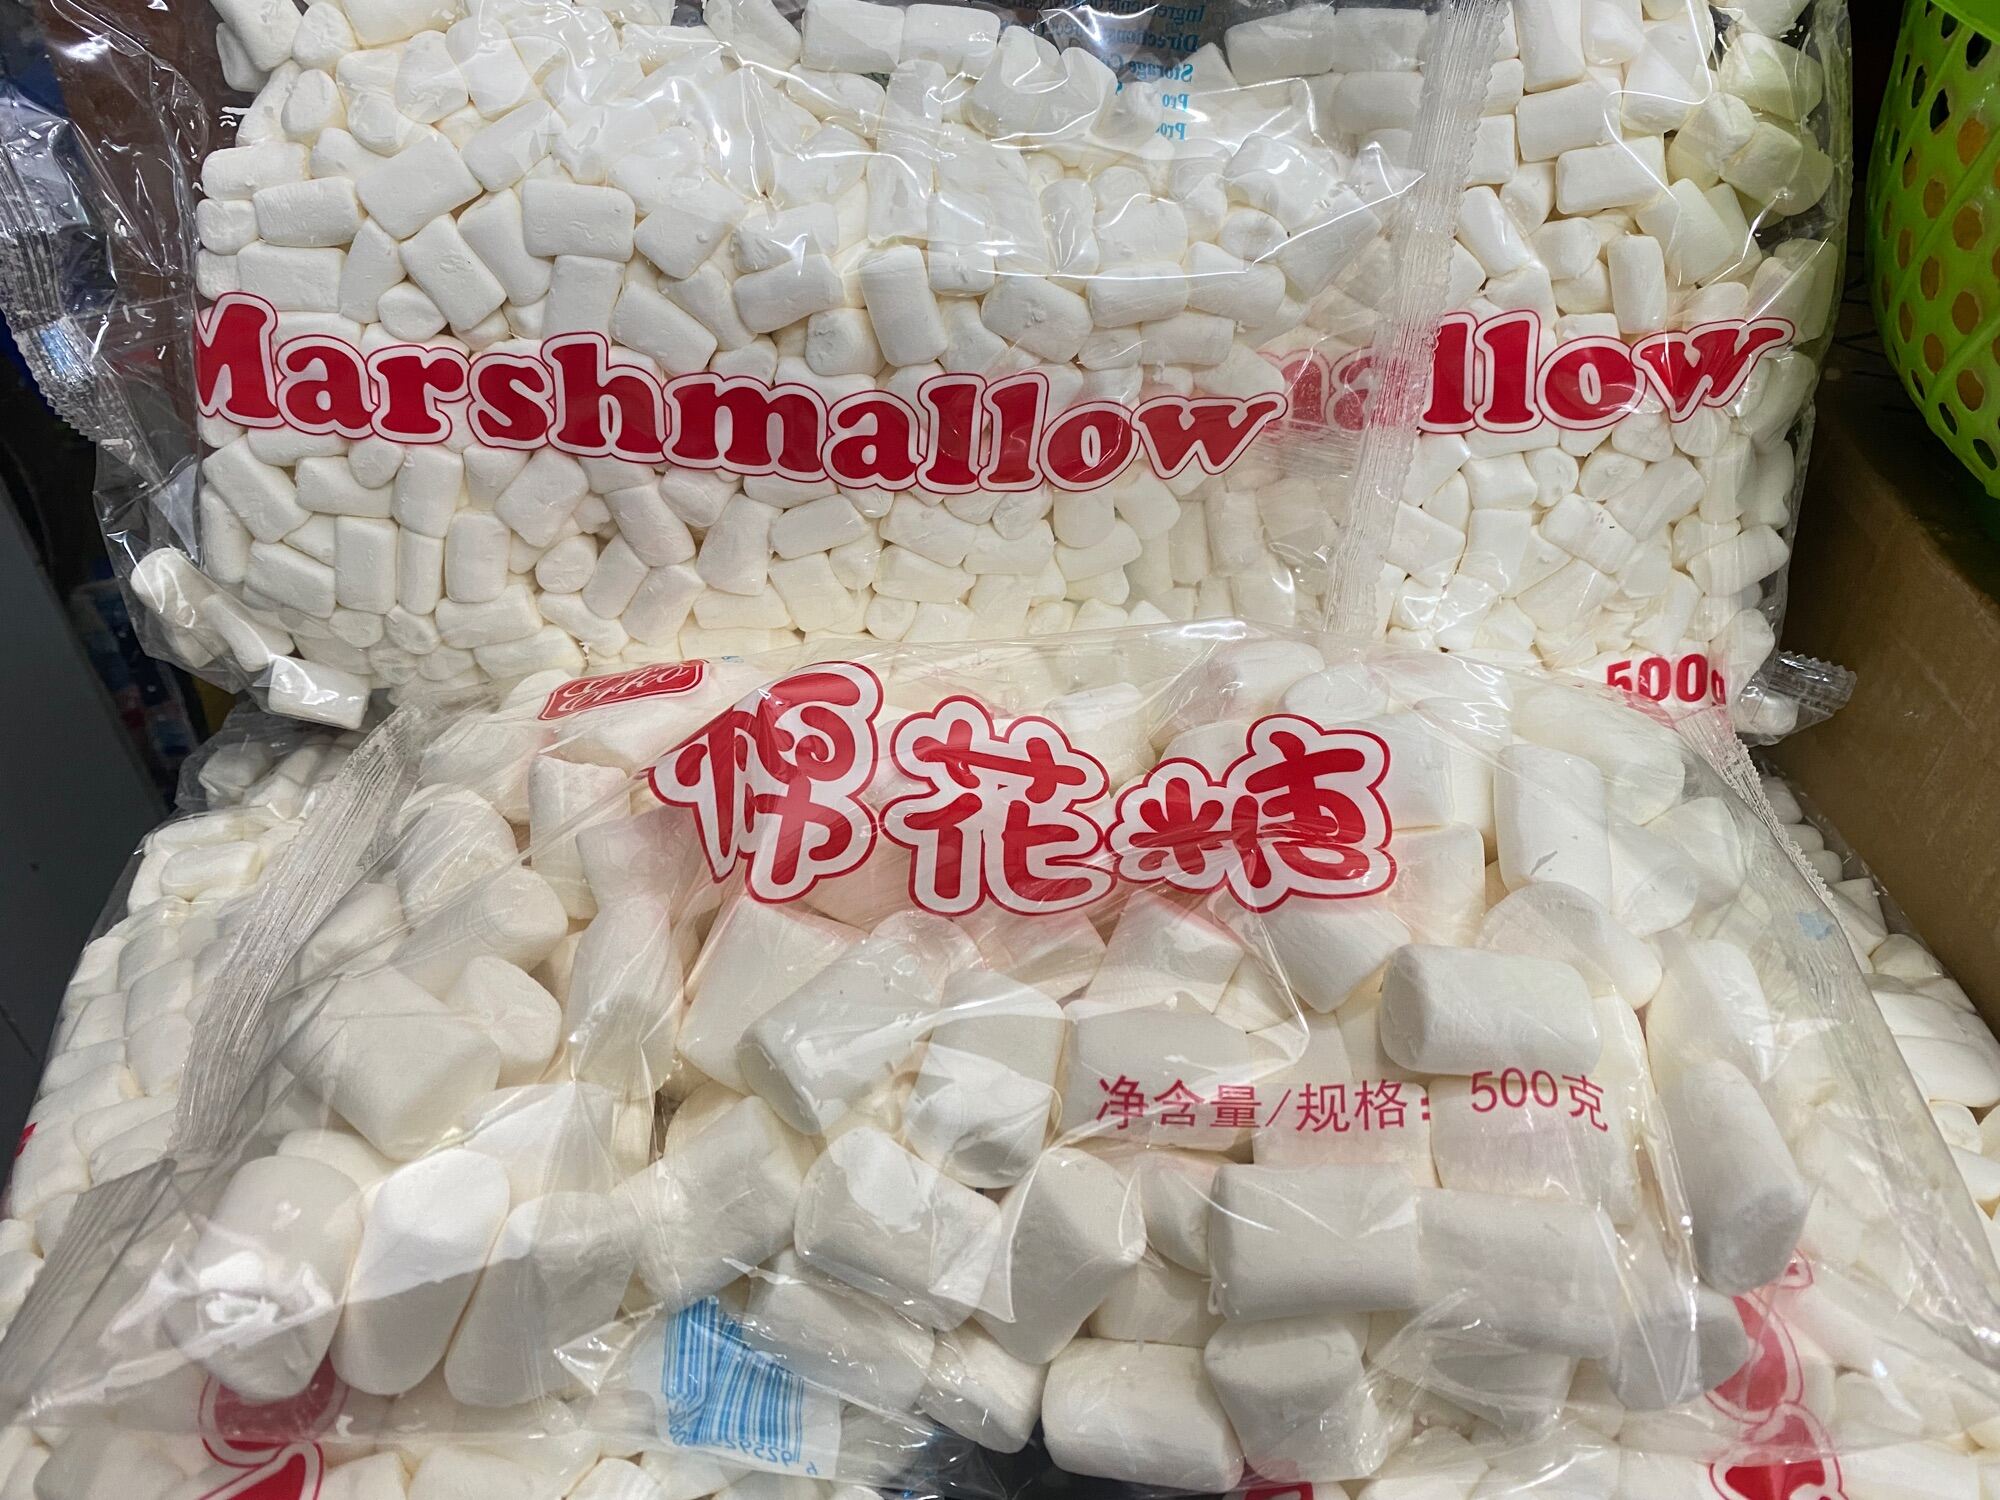 Kẹo marshmallow kẹo bấc nougat trắng 500g